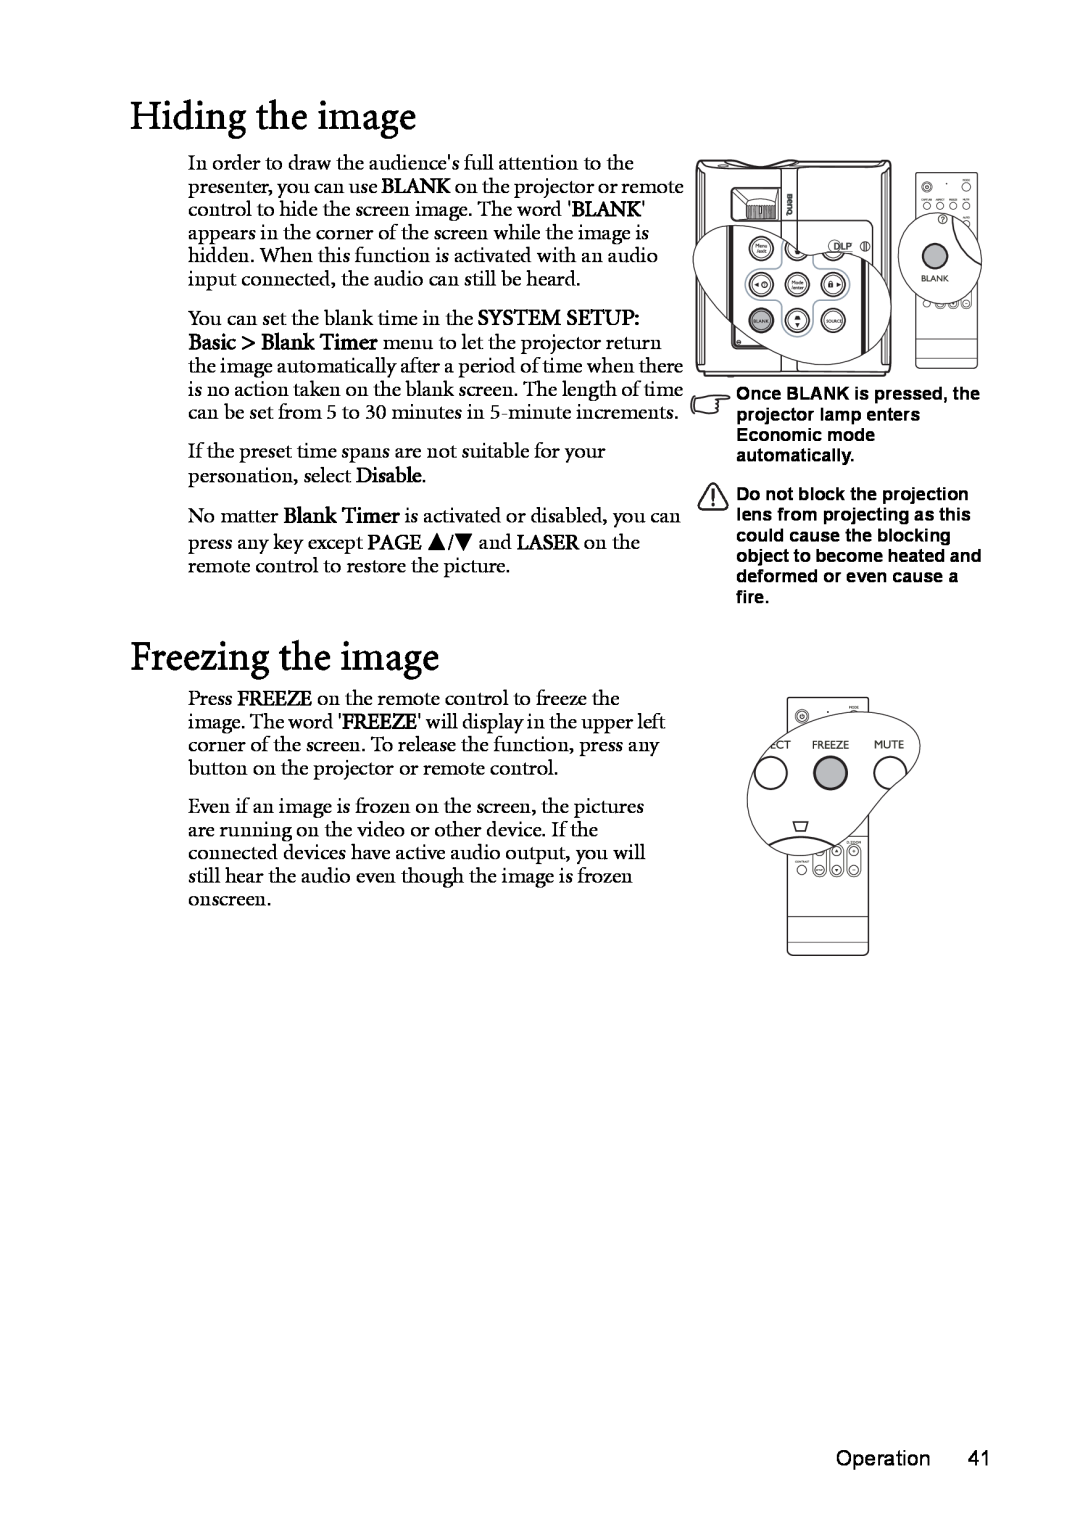 BenQ MP723 user manual Hiding the image, Freezing the image 